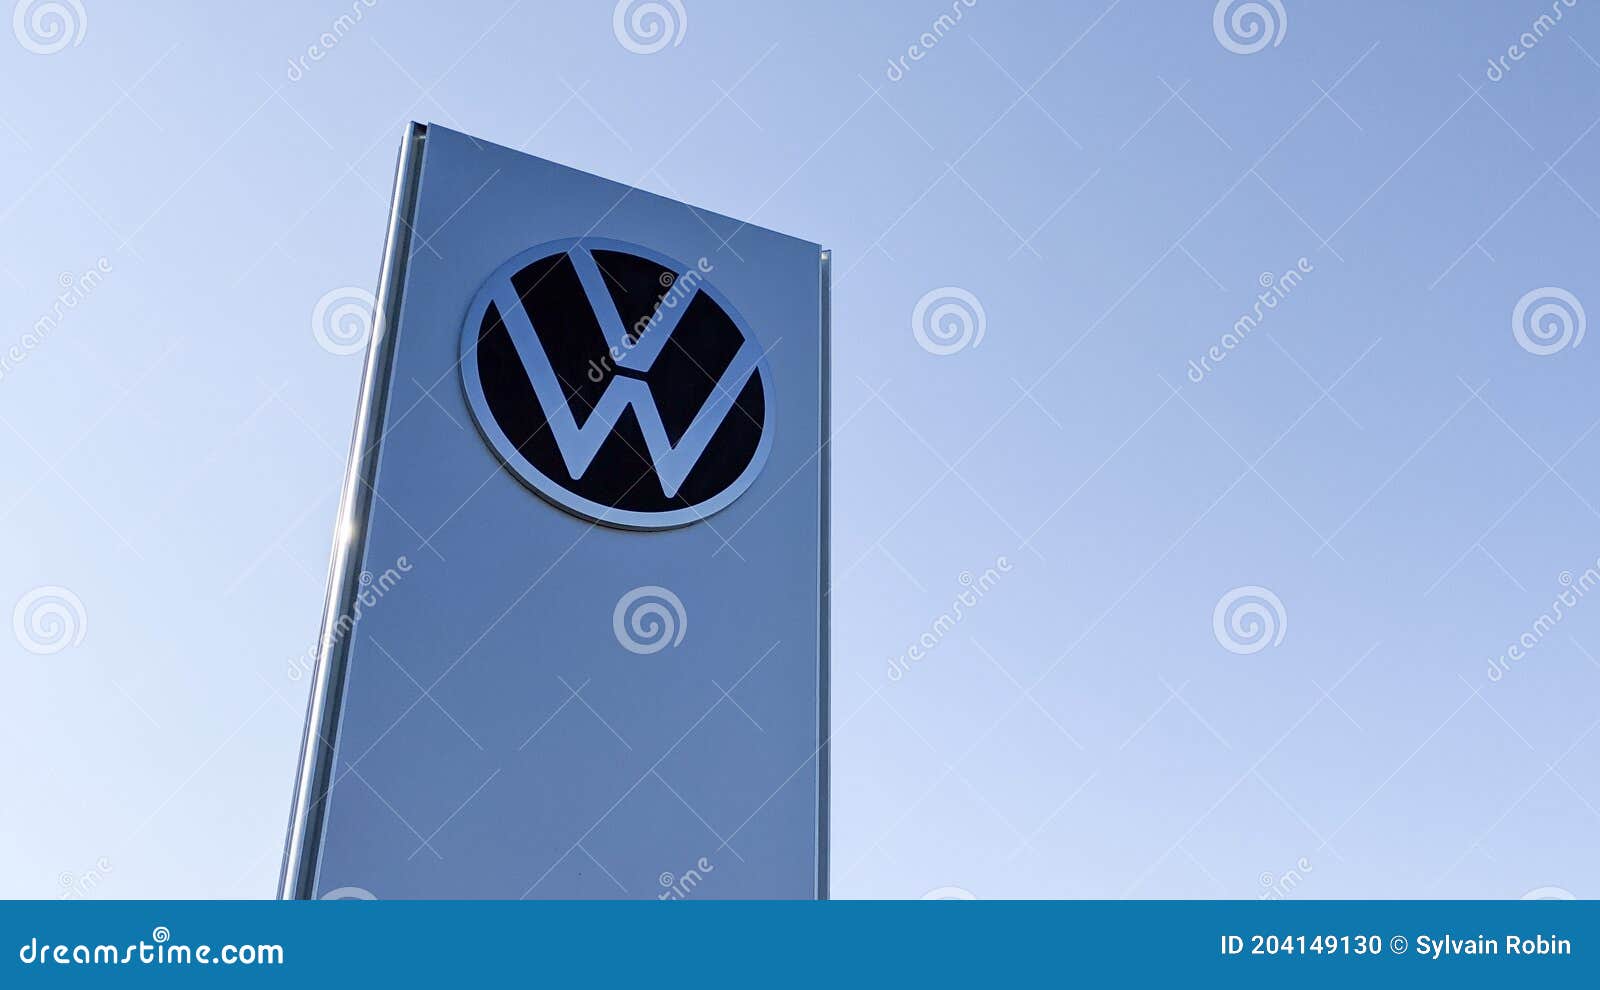 Volkswagen New Modern Logo Front of Car Shop Sign with Vw Store Dealership  Editorial Image - Image of international, lion: 204149130